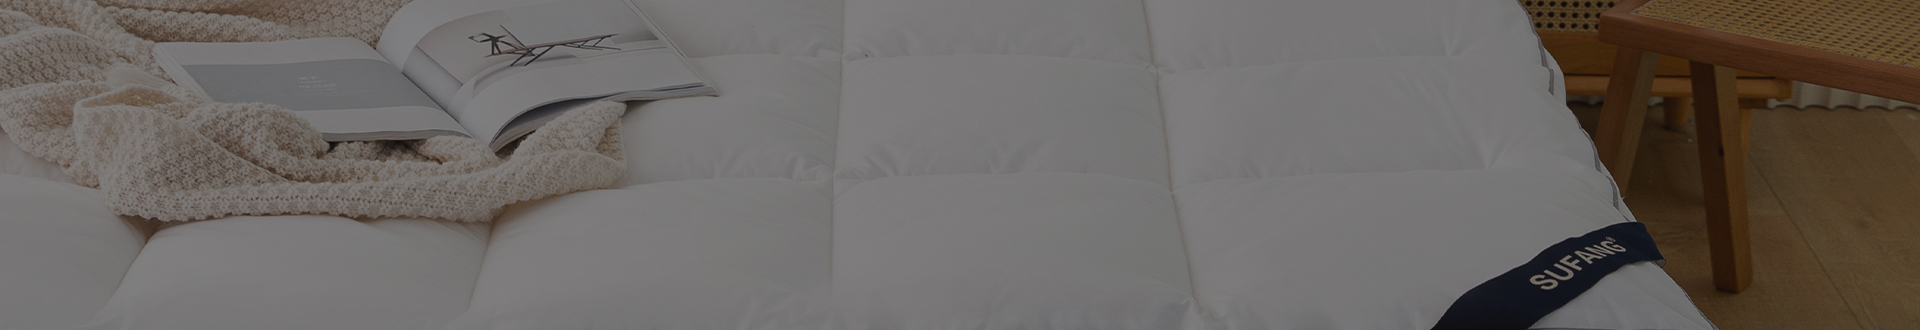 Five Star Hotel Memory Foam Pillow